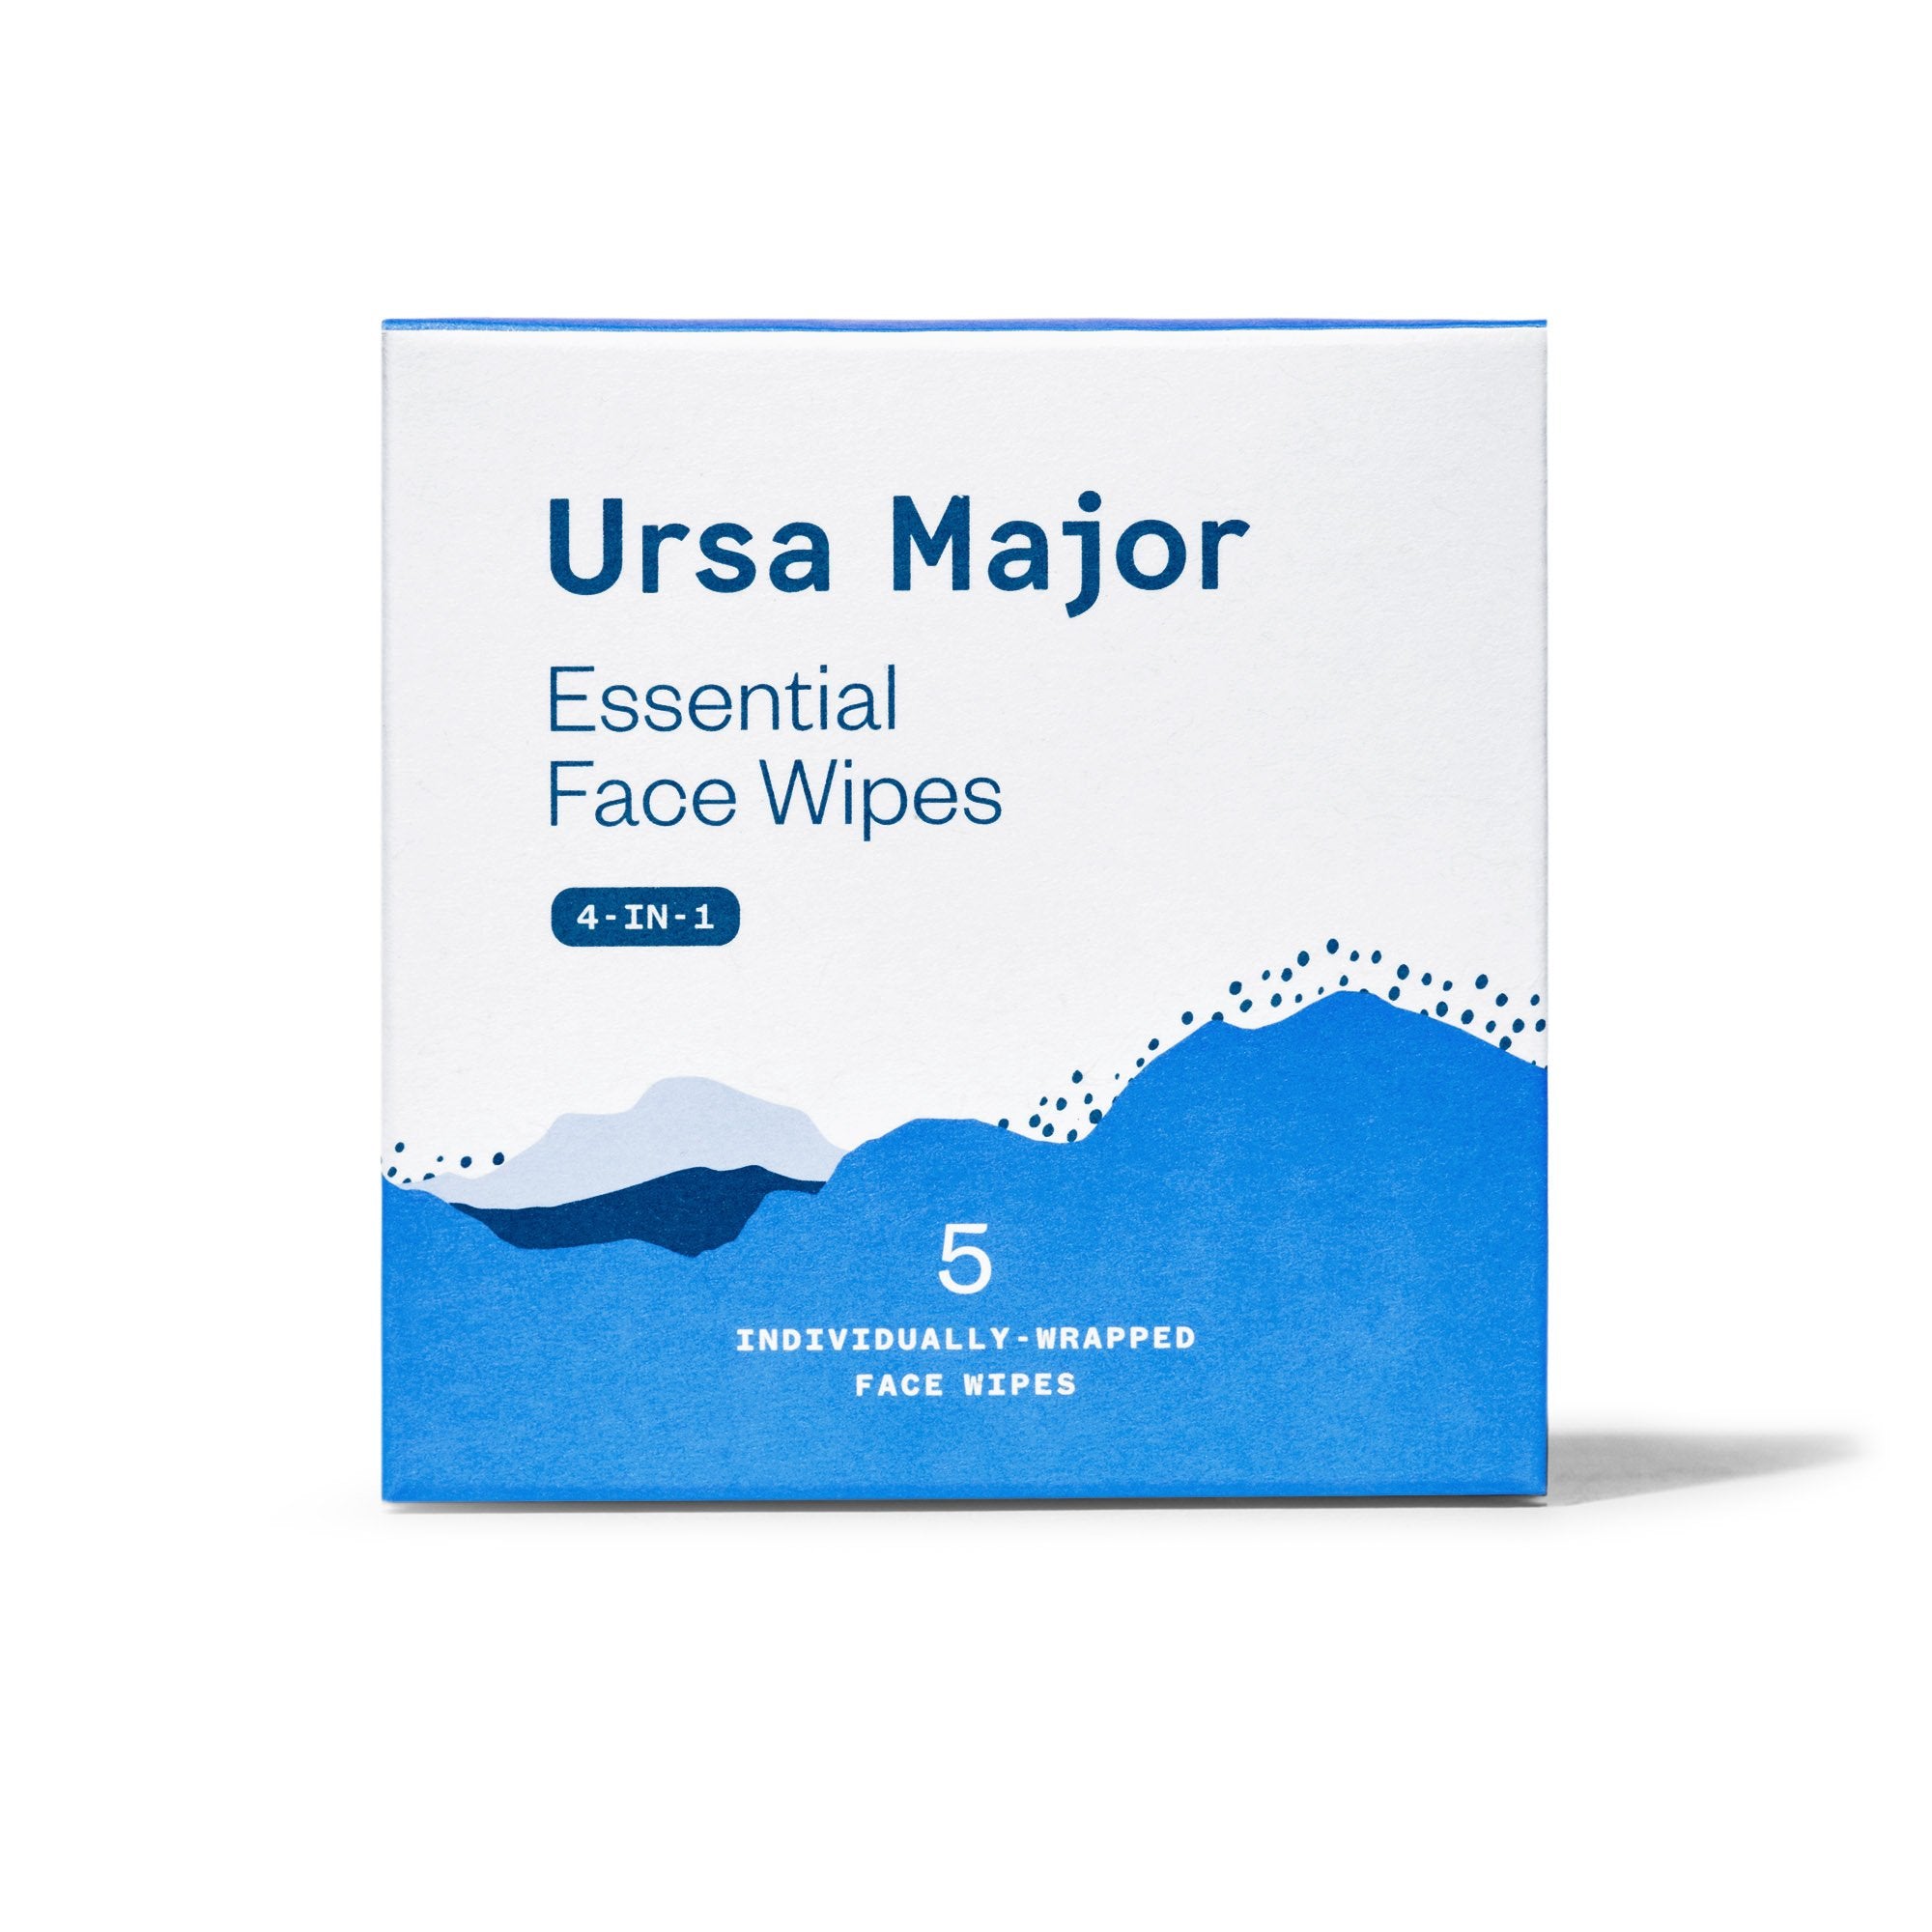 Ursa Major Essential Face Wipes 5 Count